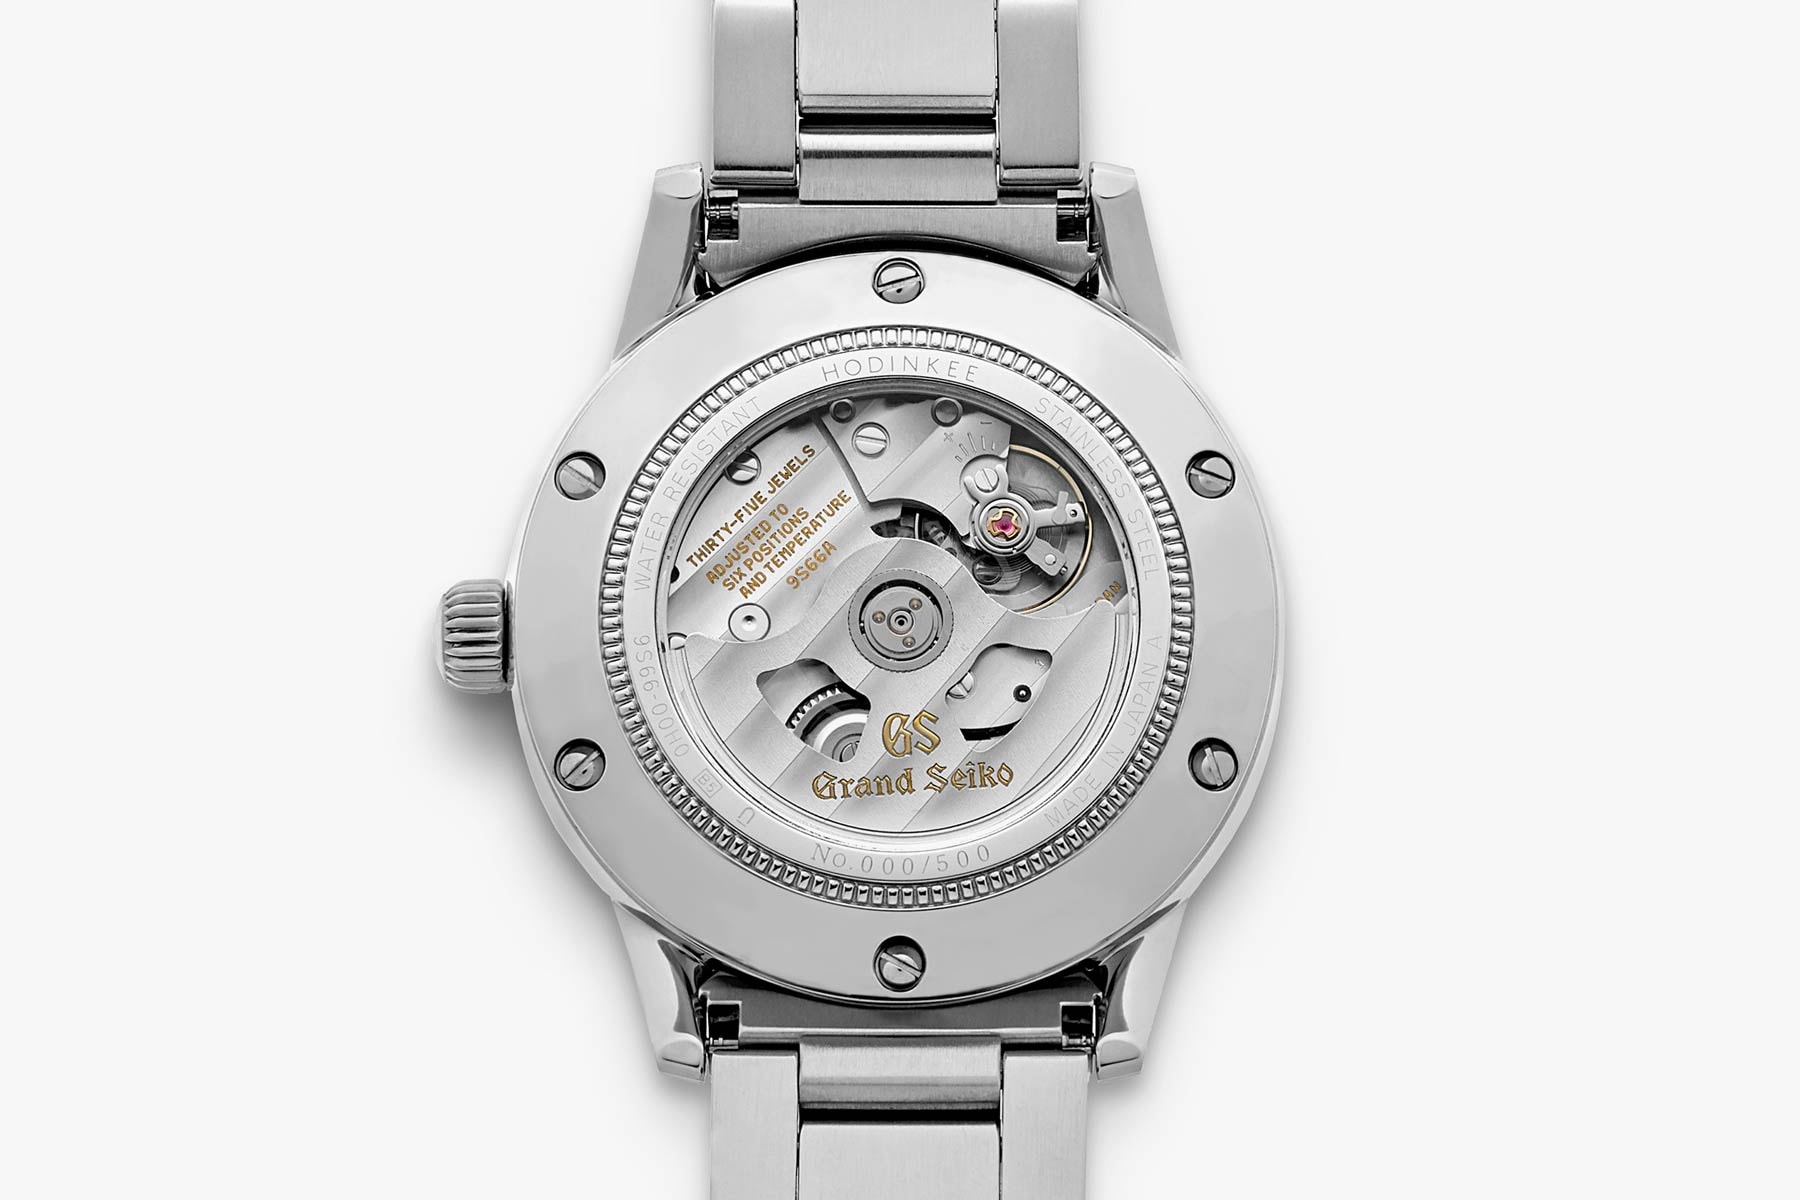 Grand Seiko Automatic GMT SBGM236 HODINKEE Limited Edition News watches Japan Seiko Grand Seiko Watches 